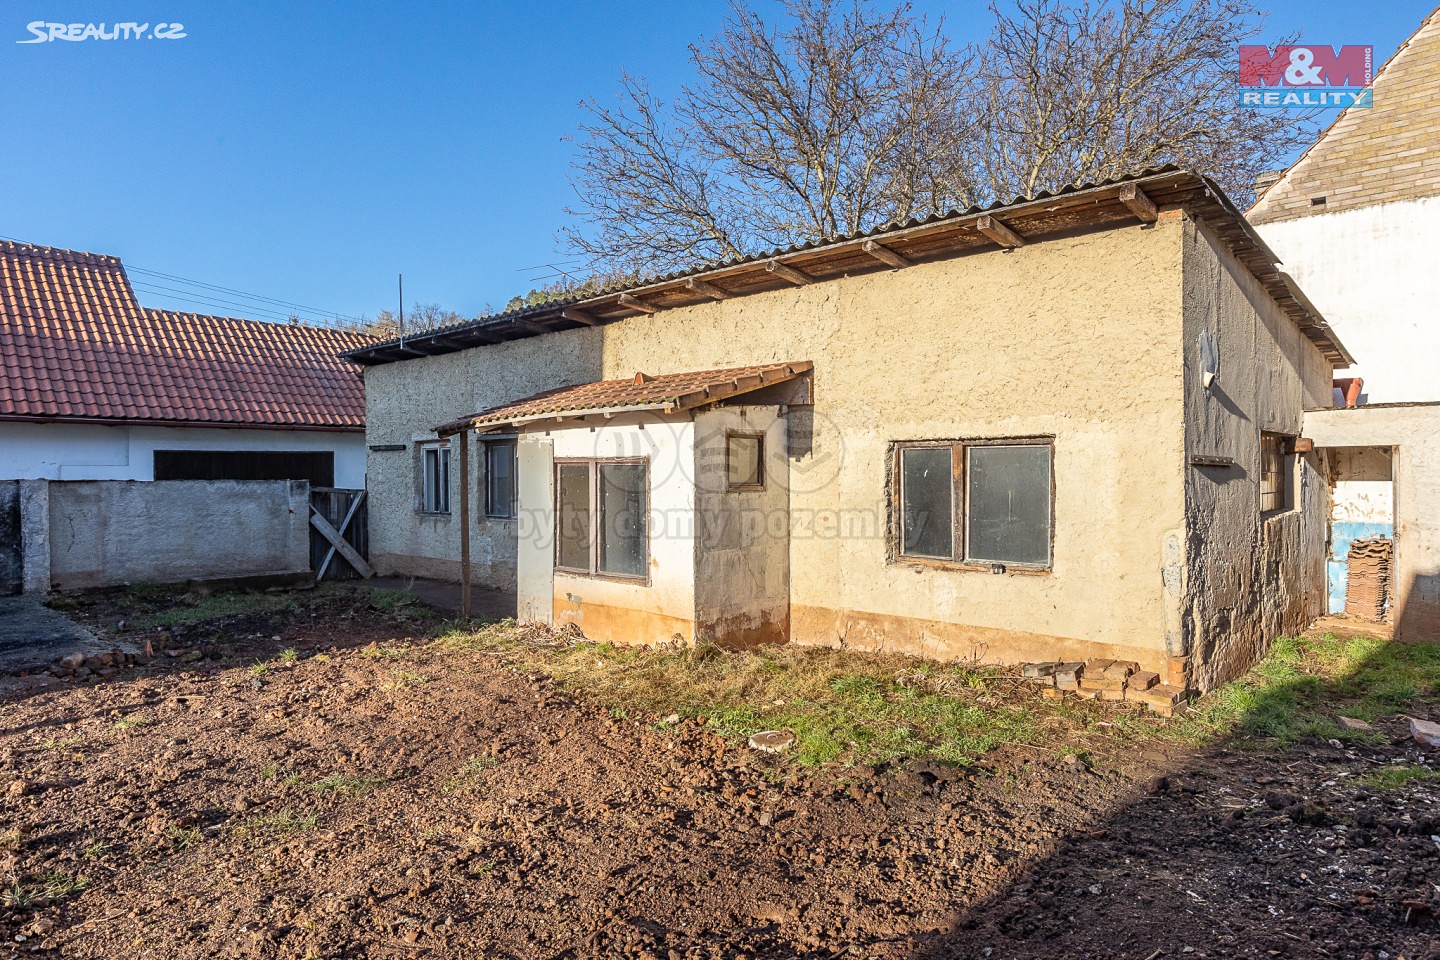 Prodej  rodinného domu 96 m², pozemek 532 m², Děkov - Vlkov, okres Rakovník